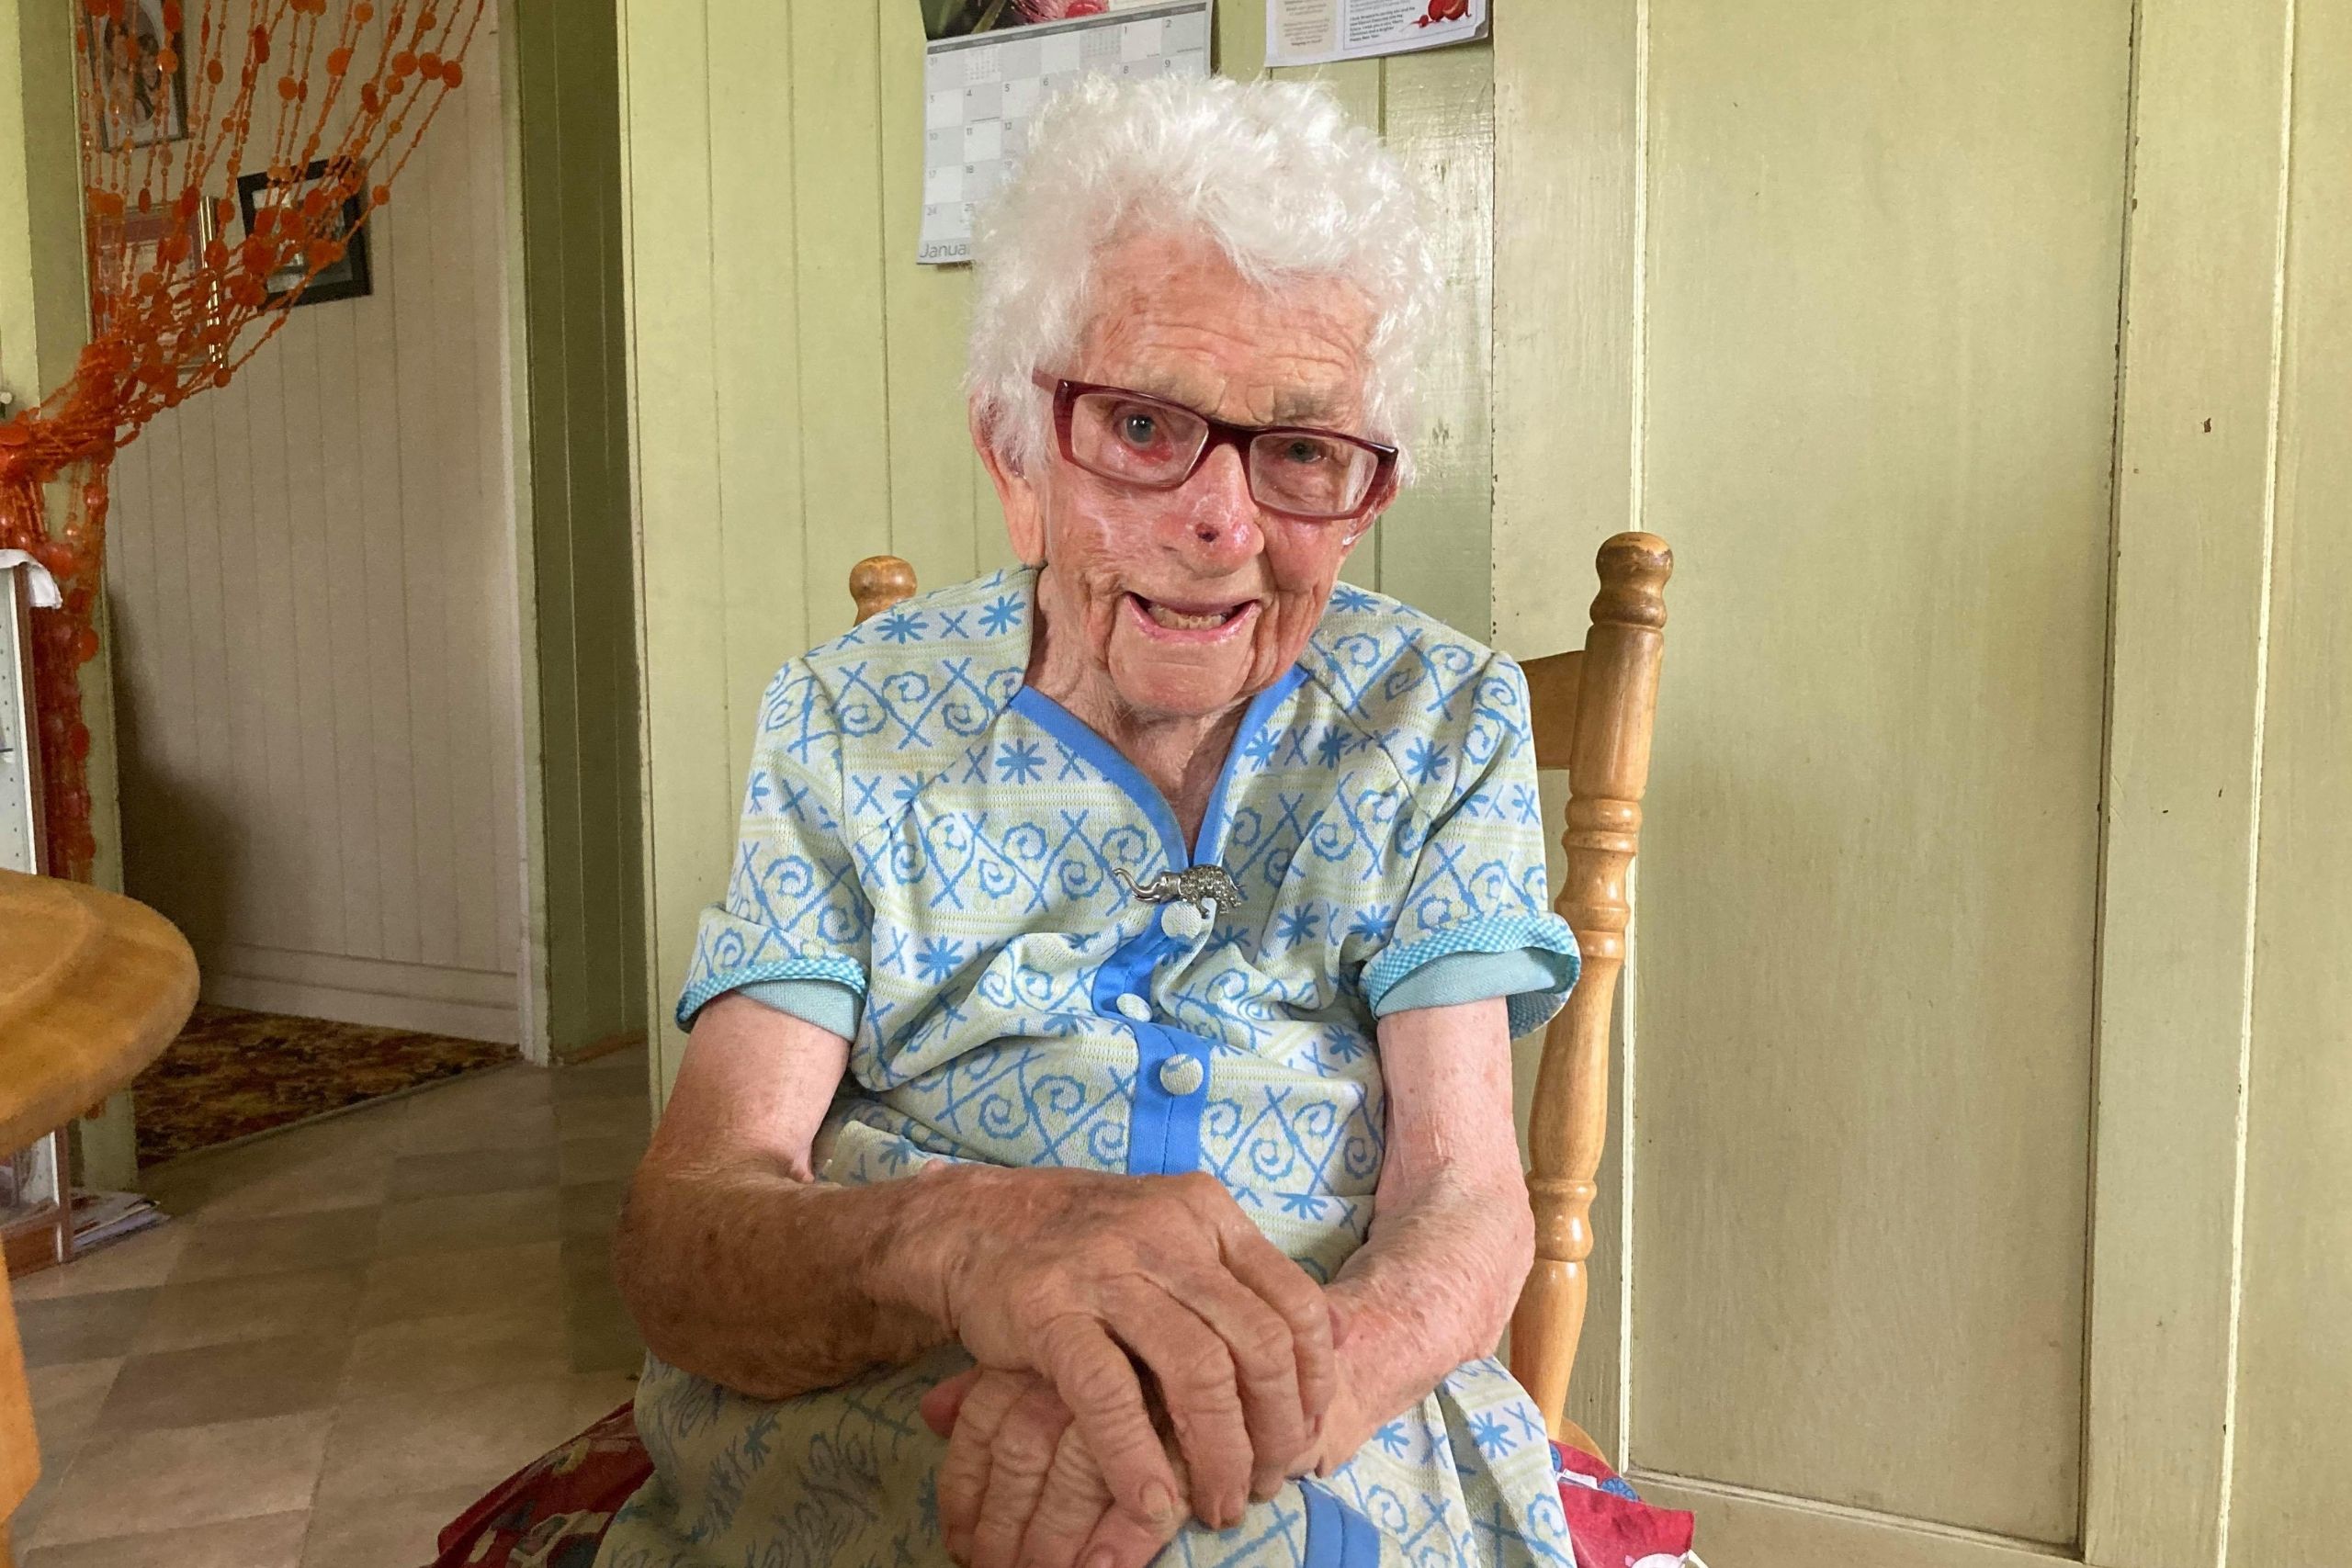 109 years young: Elizabeth Jordan chalks up another milestone birthday - Ipswich First